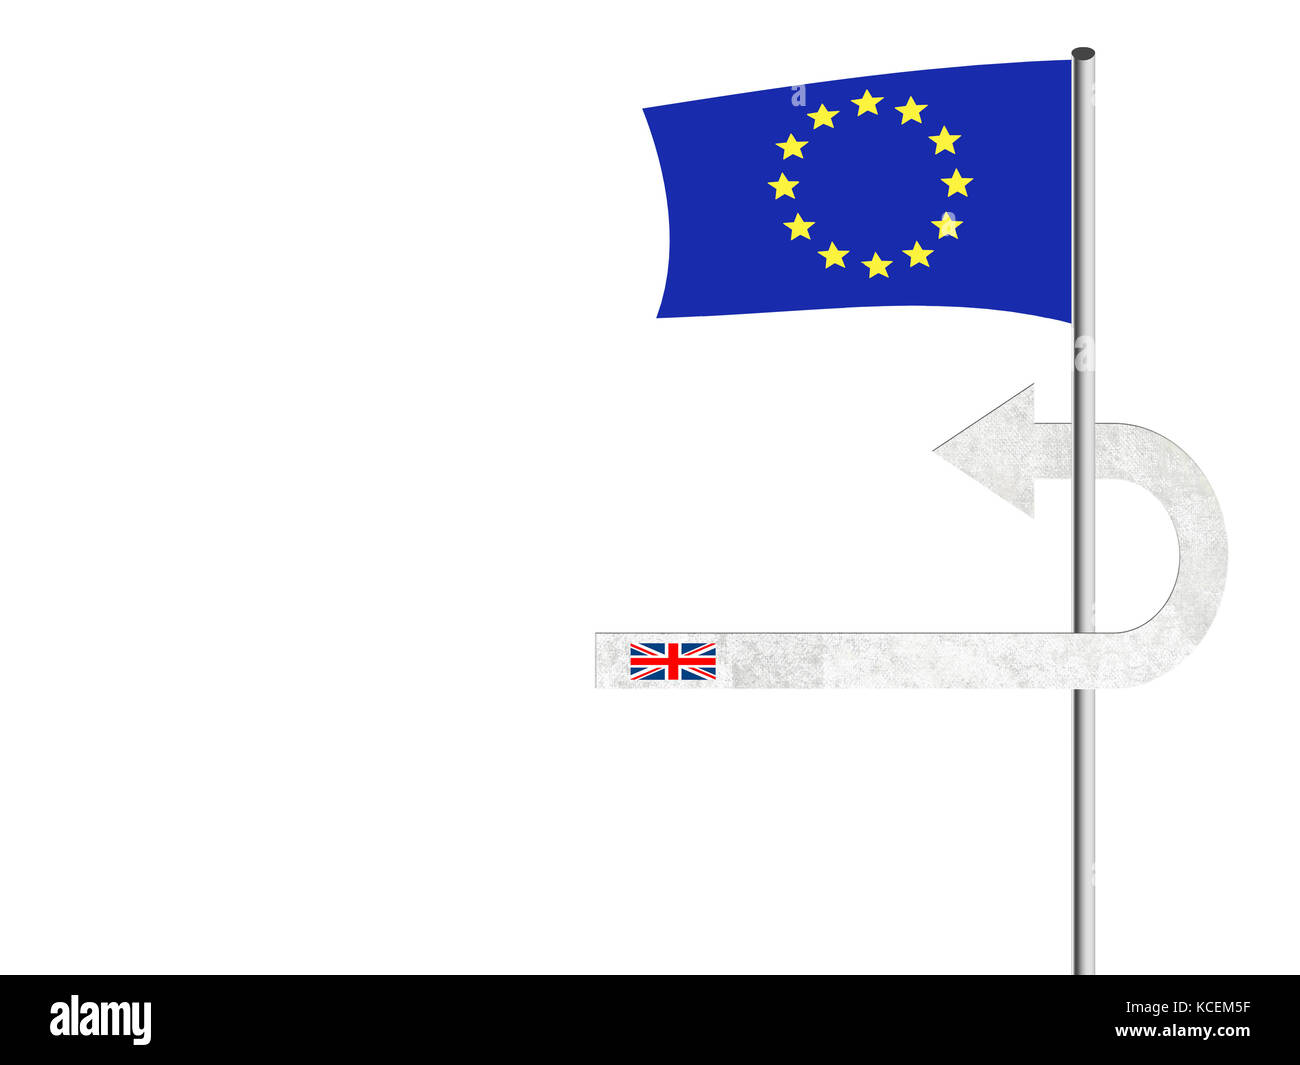 UK doing U-turn around EU flag. Stock Photo